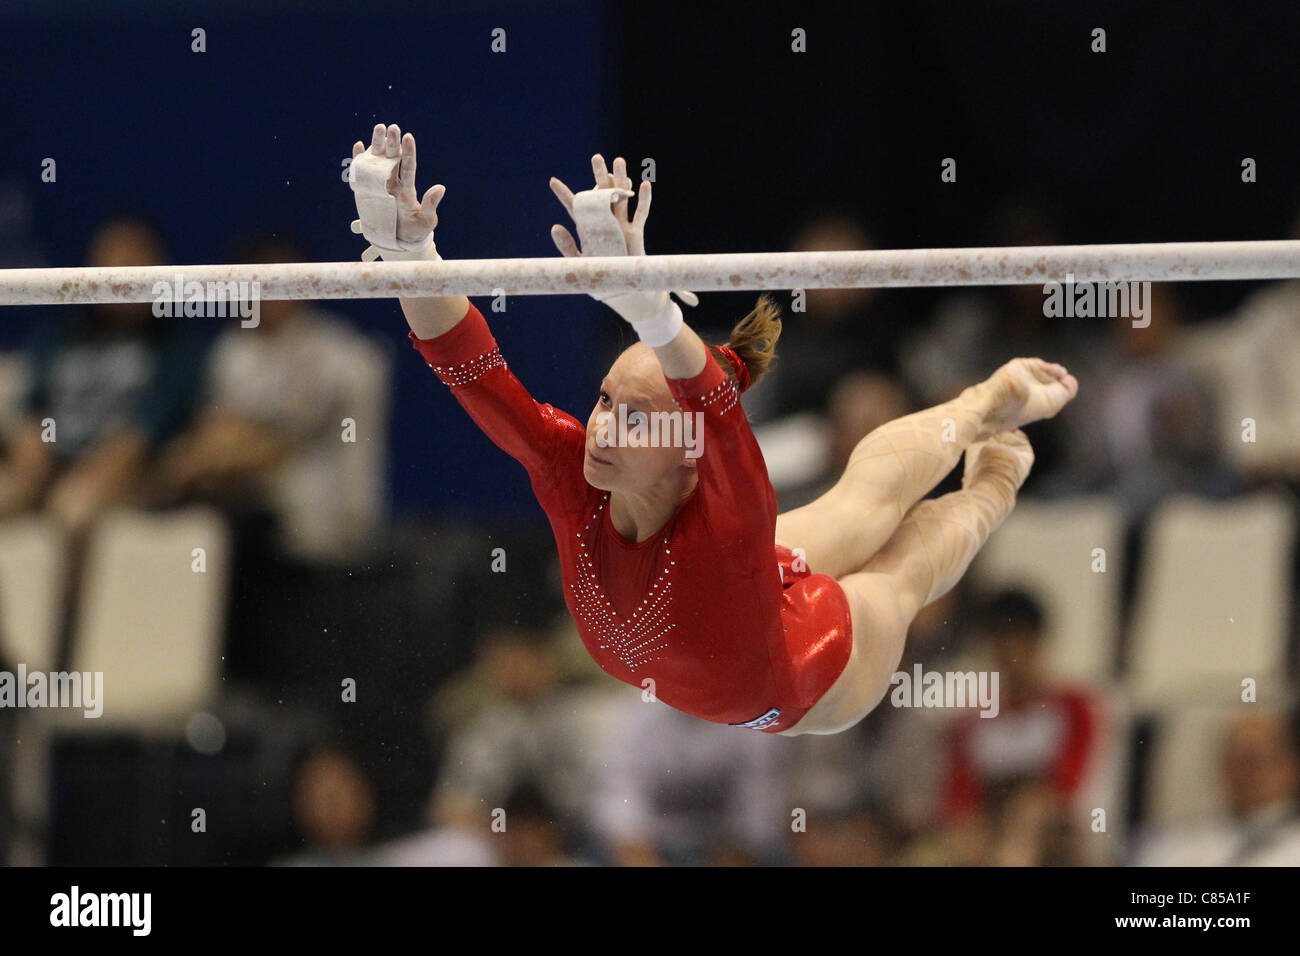 Anna Dementyeva (RUS) performs during the 2011 World Artistic Gymnastics Championships in Tokyo, Japan. Stock Photo